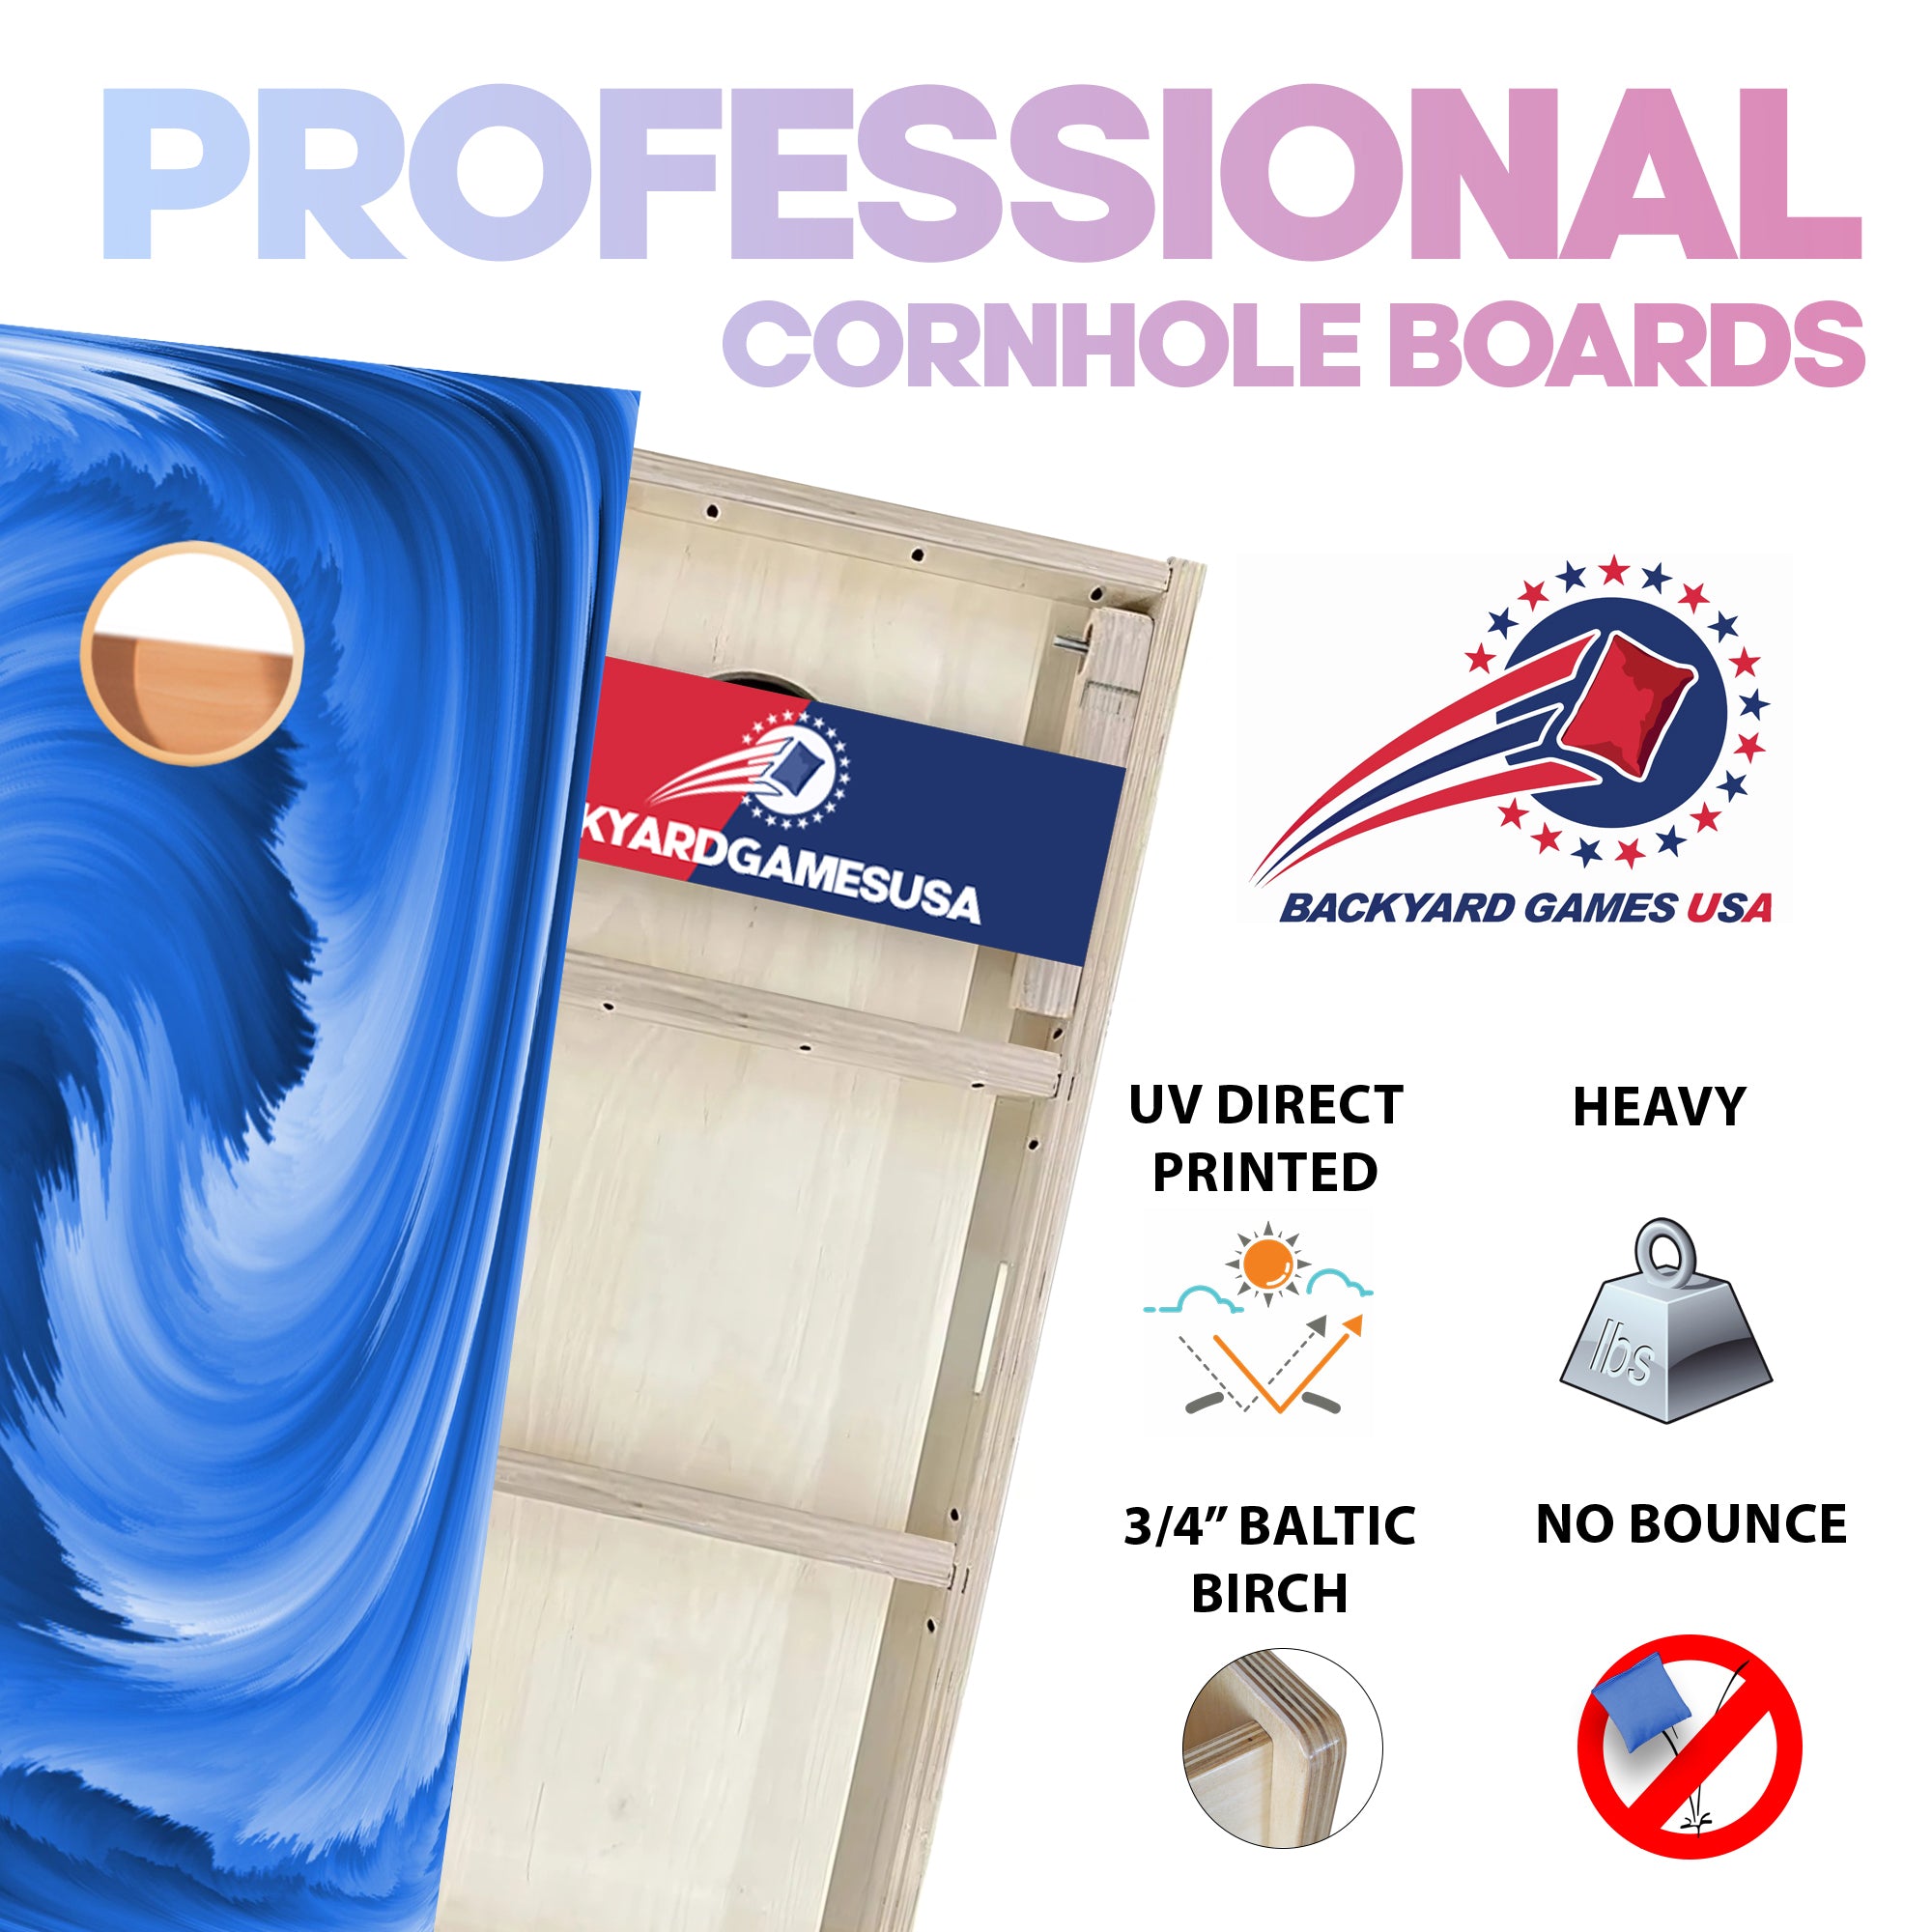 Blue Swirl Professional Cornhole Boards